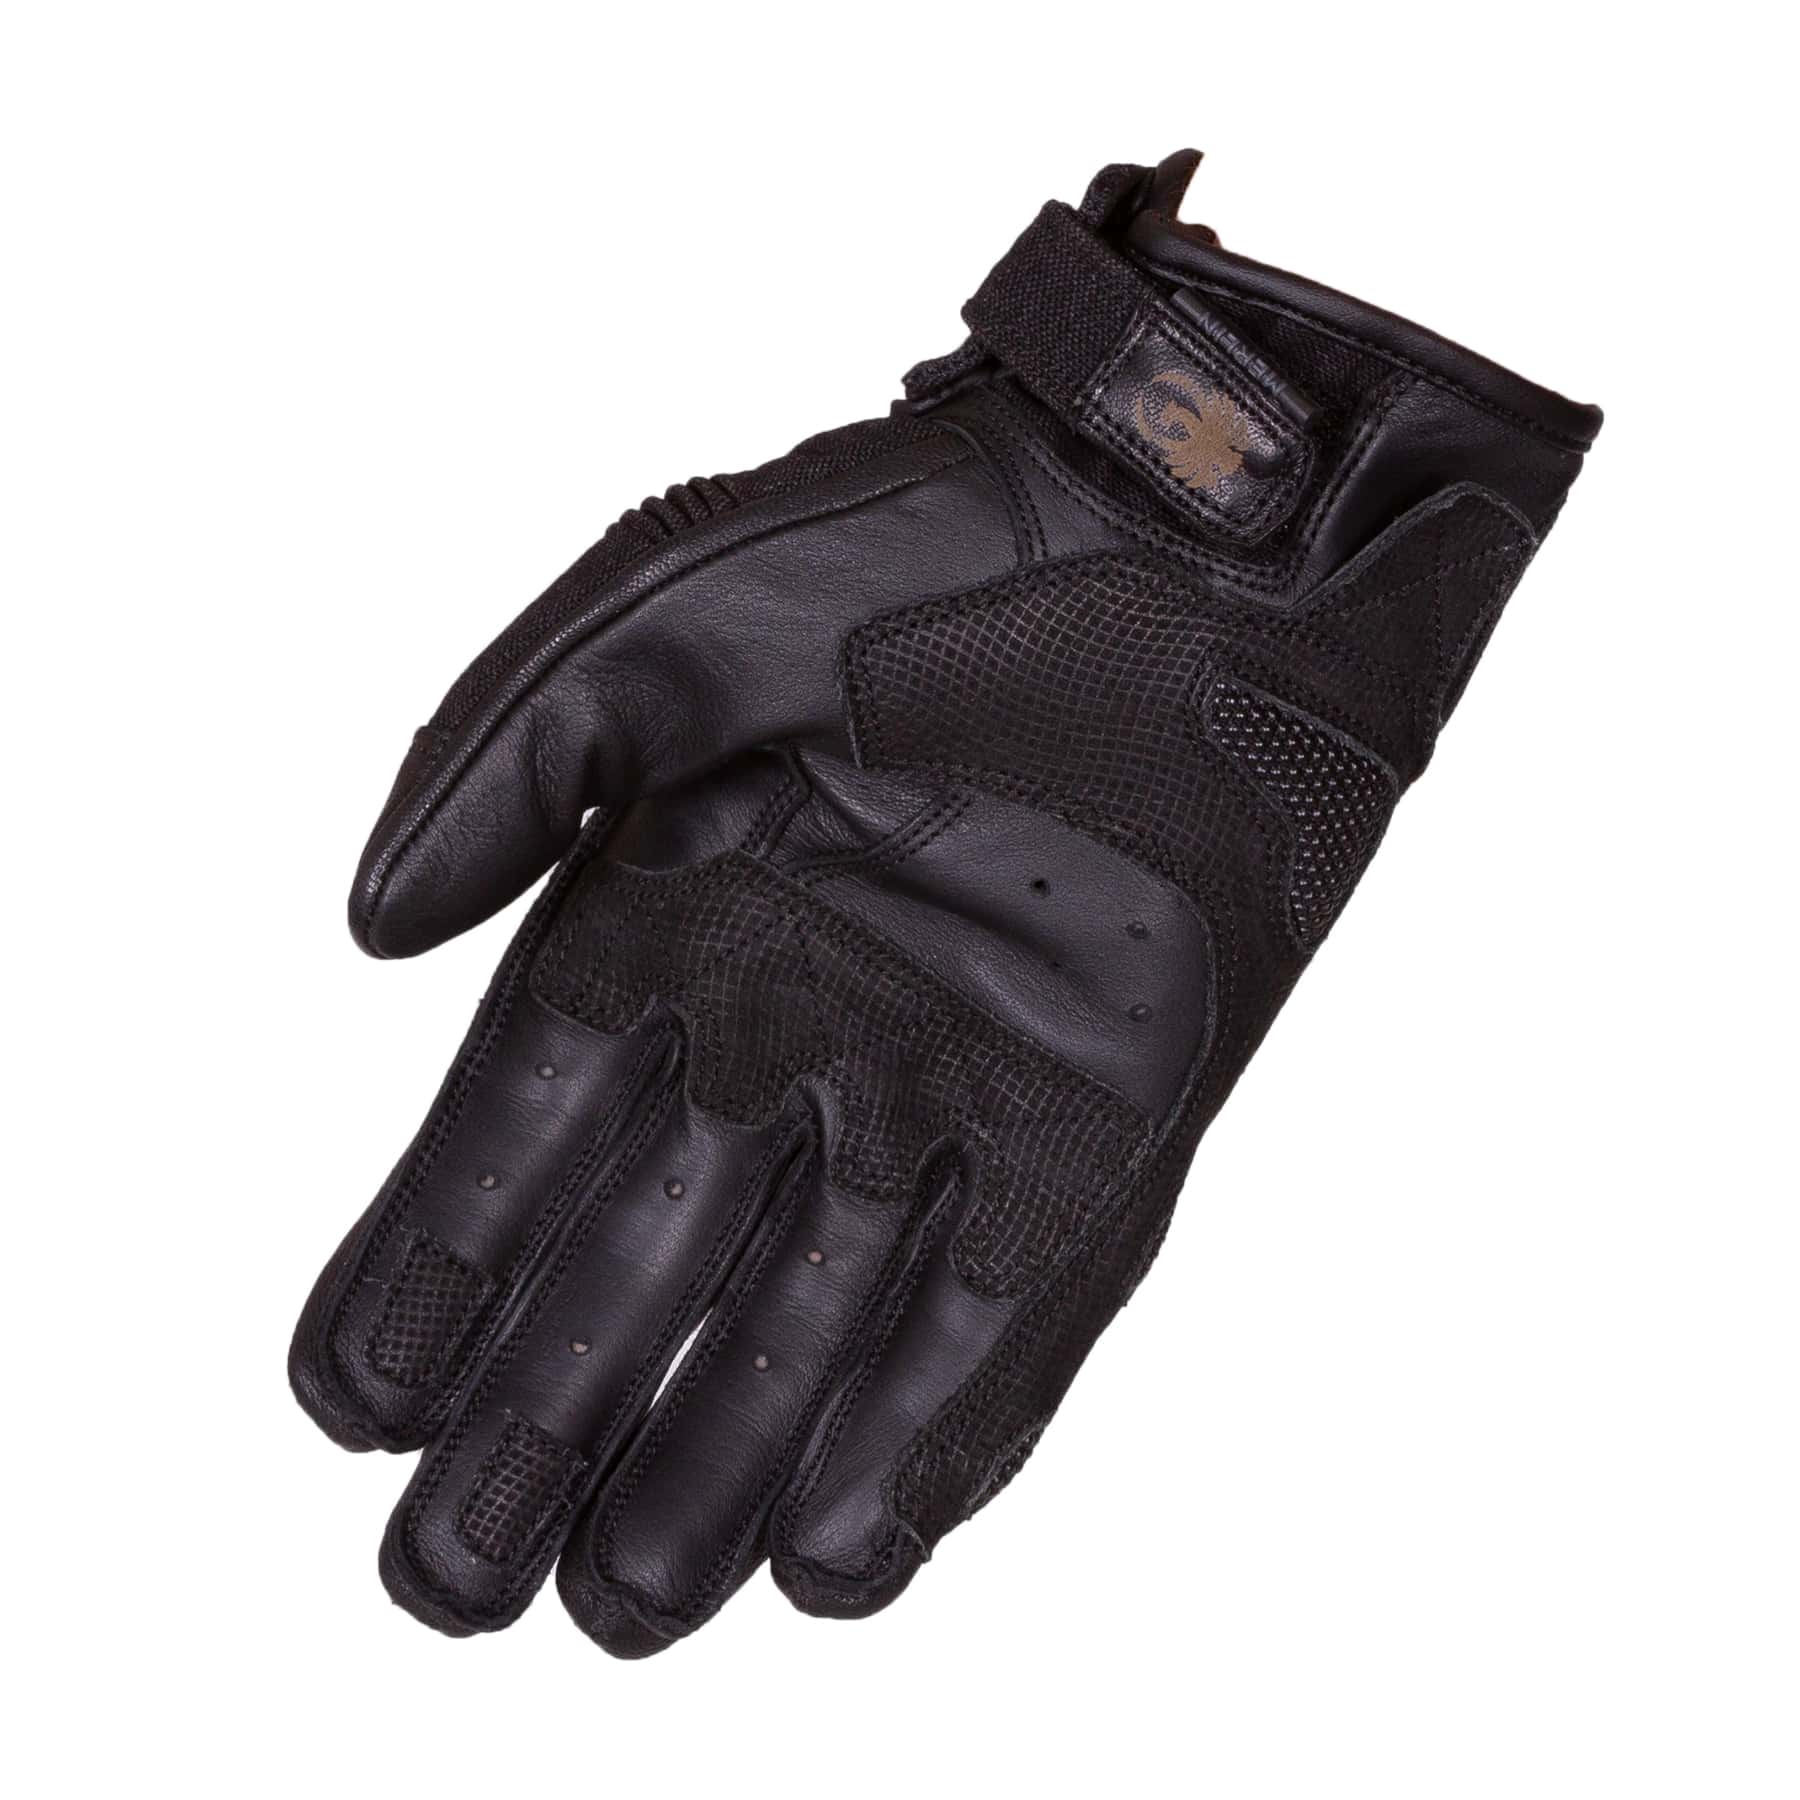 Merlin Mahala Raid glove in black